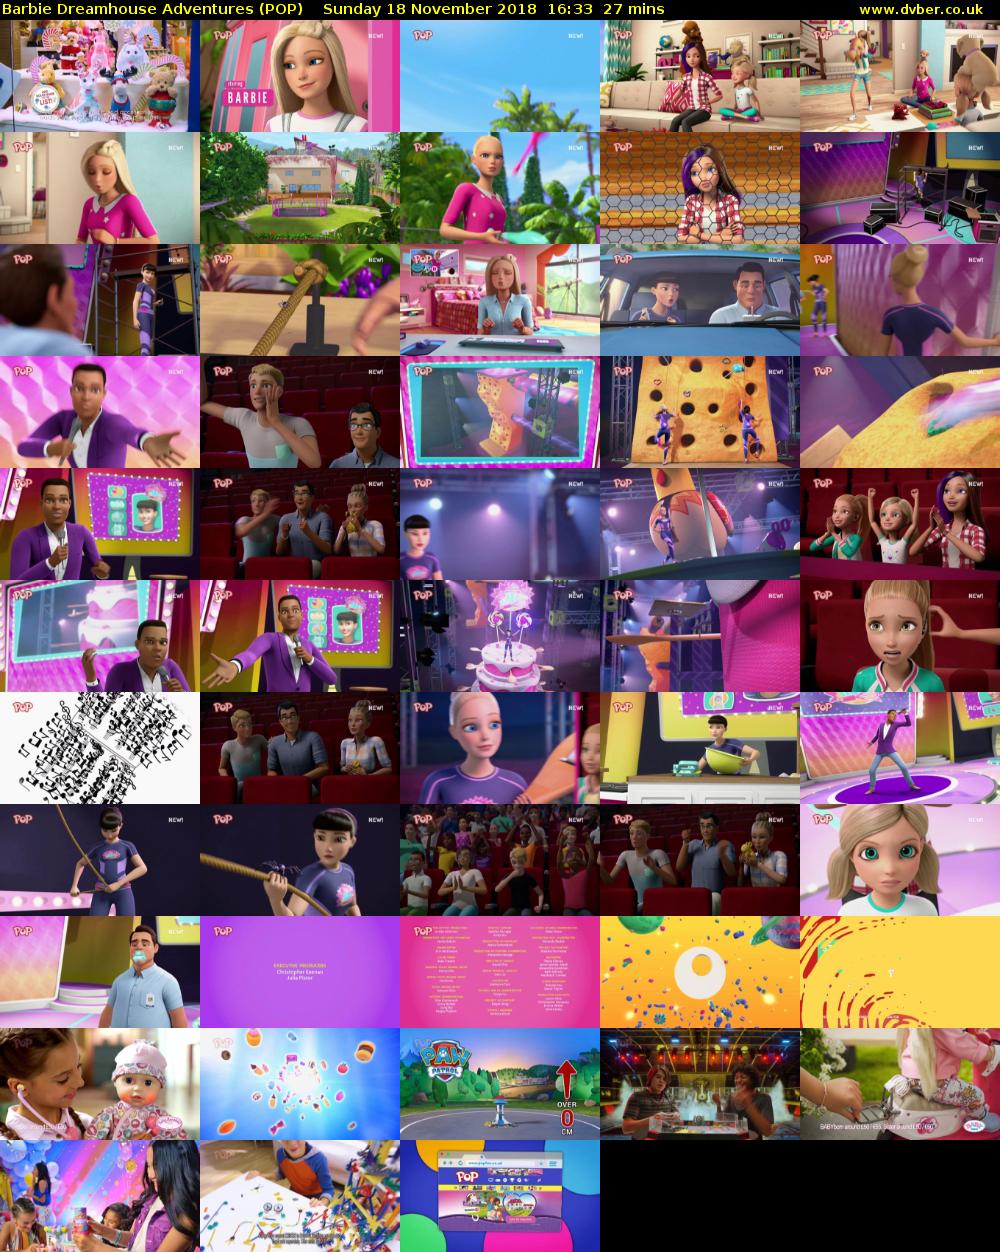 Barbie Dreamhouse Adventures (POP) Sunday 18 November 2018 16:33 - 17:00